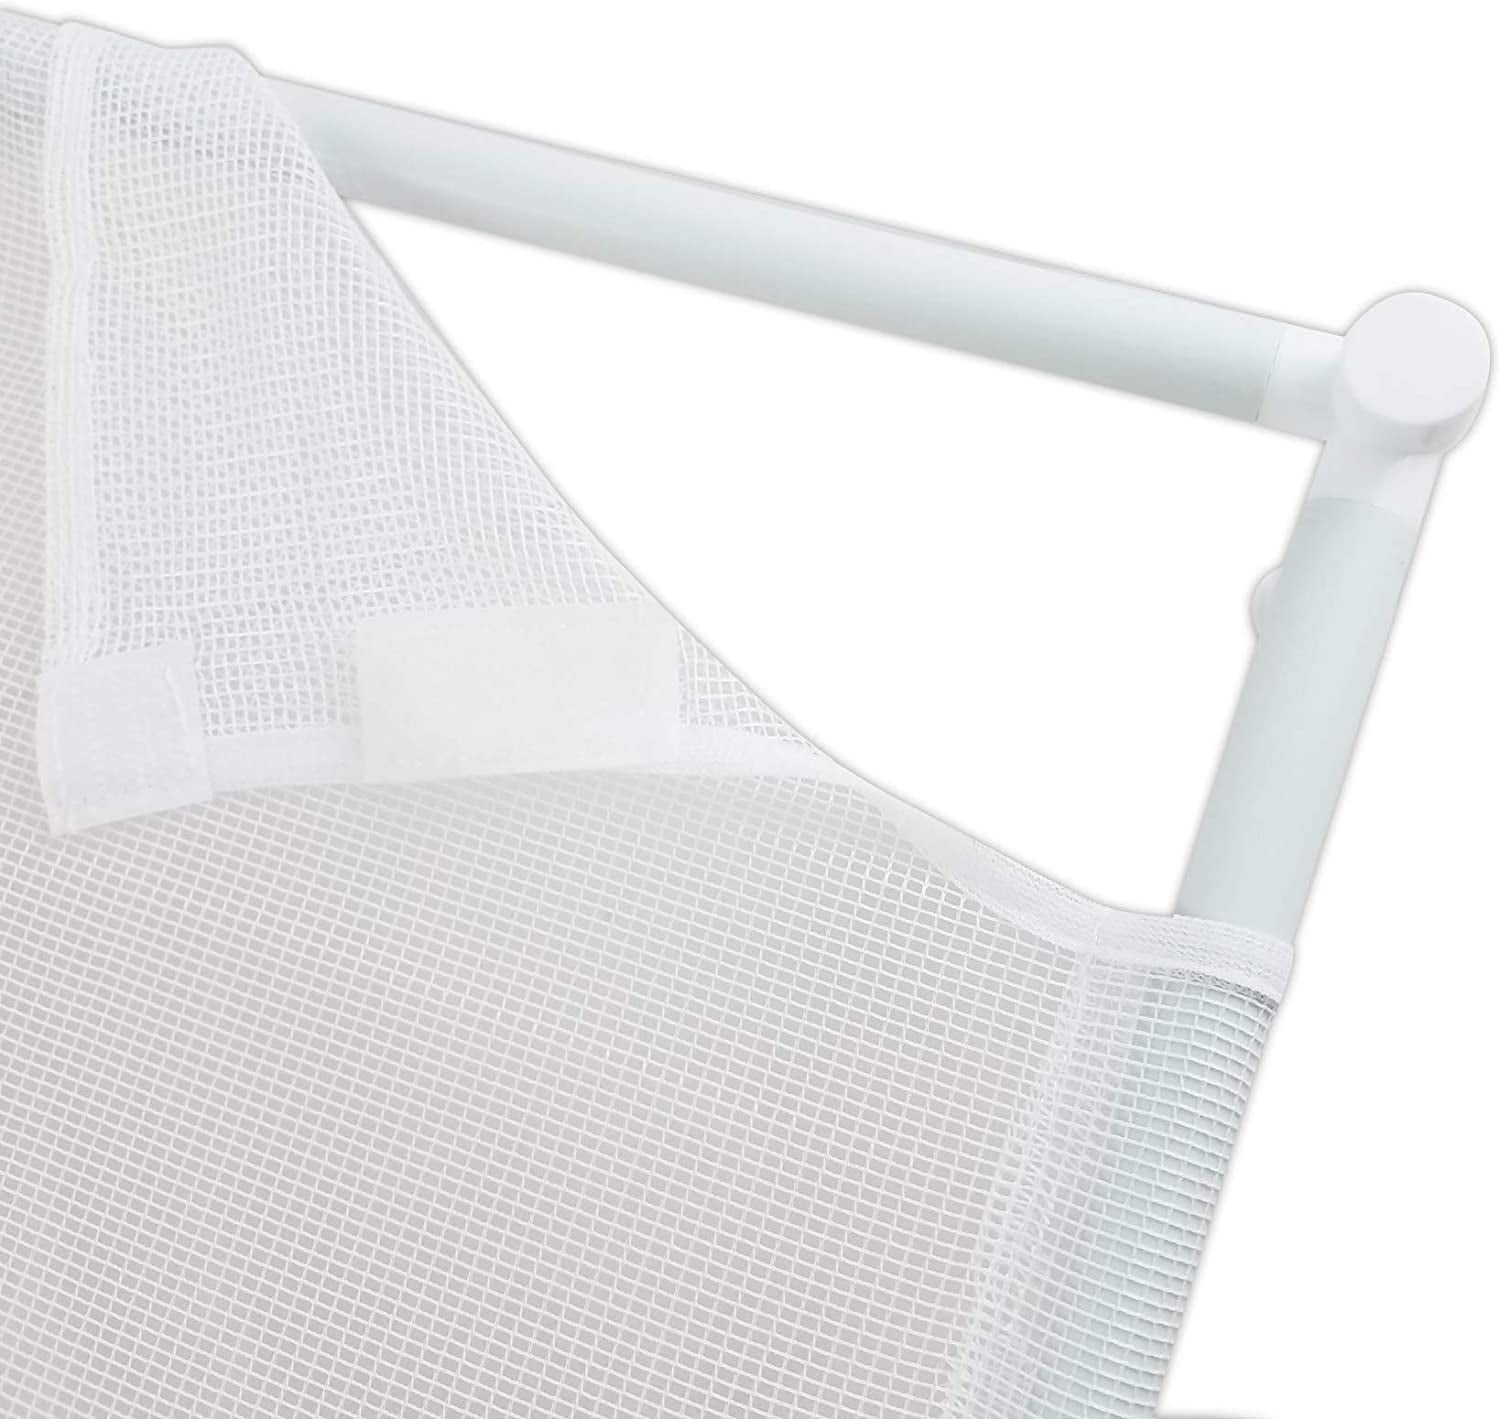 Homz Garment Drying Rack Mesh Netting Stackable 27" x 27" White Plastic F... 